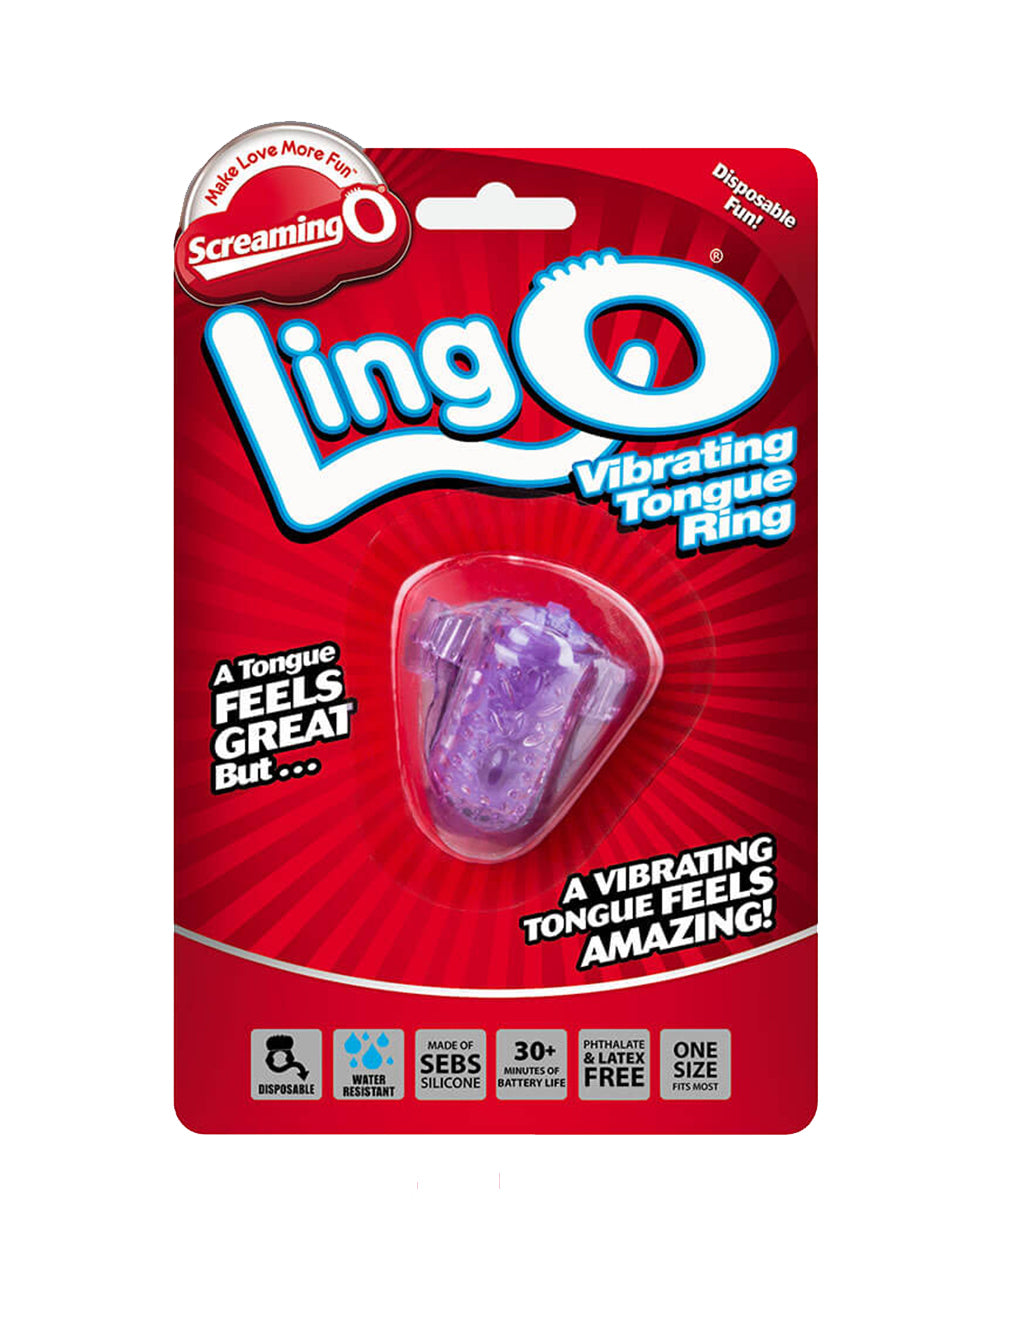 Screaming O Ling O- Package